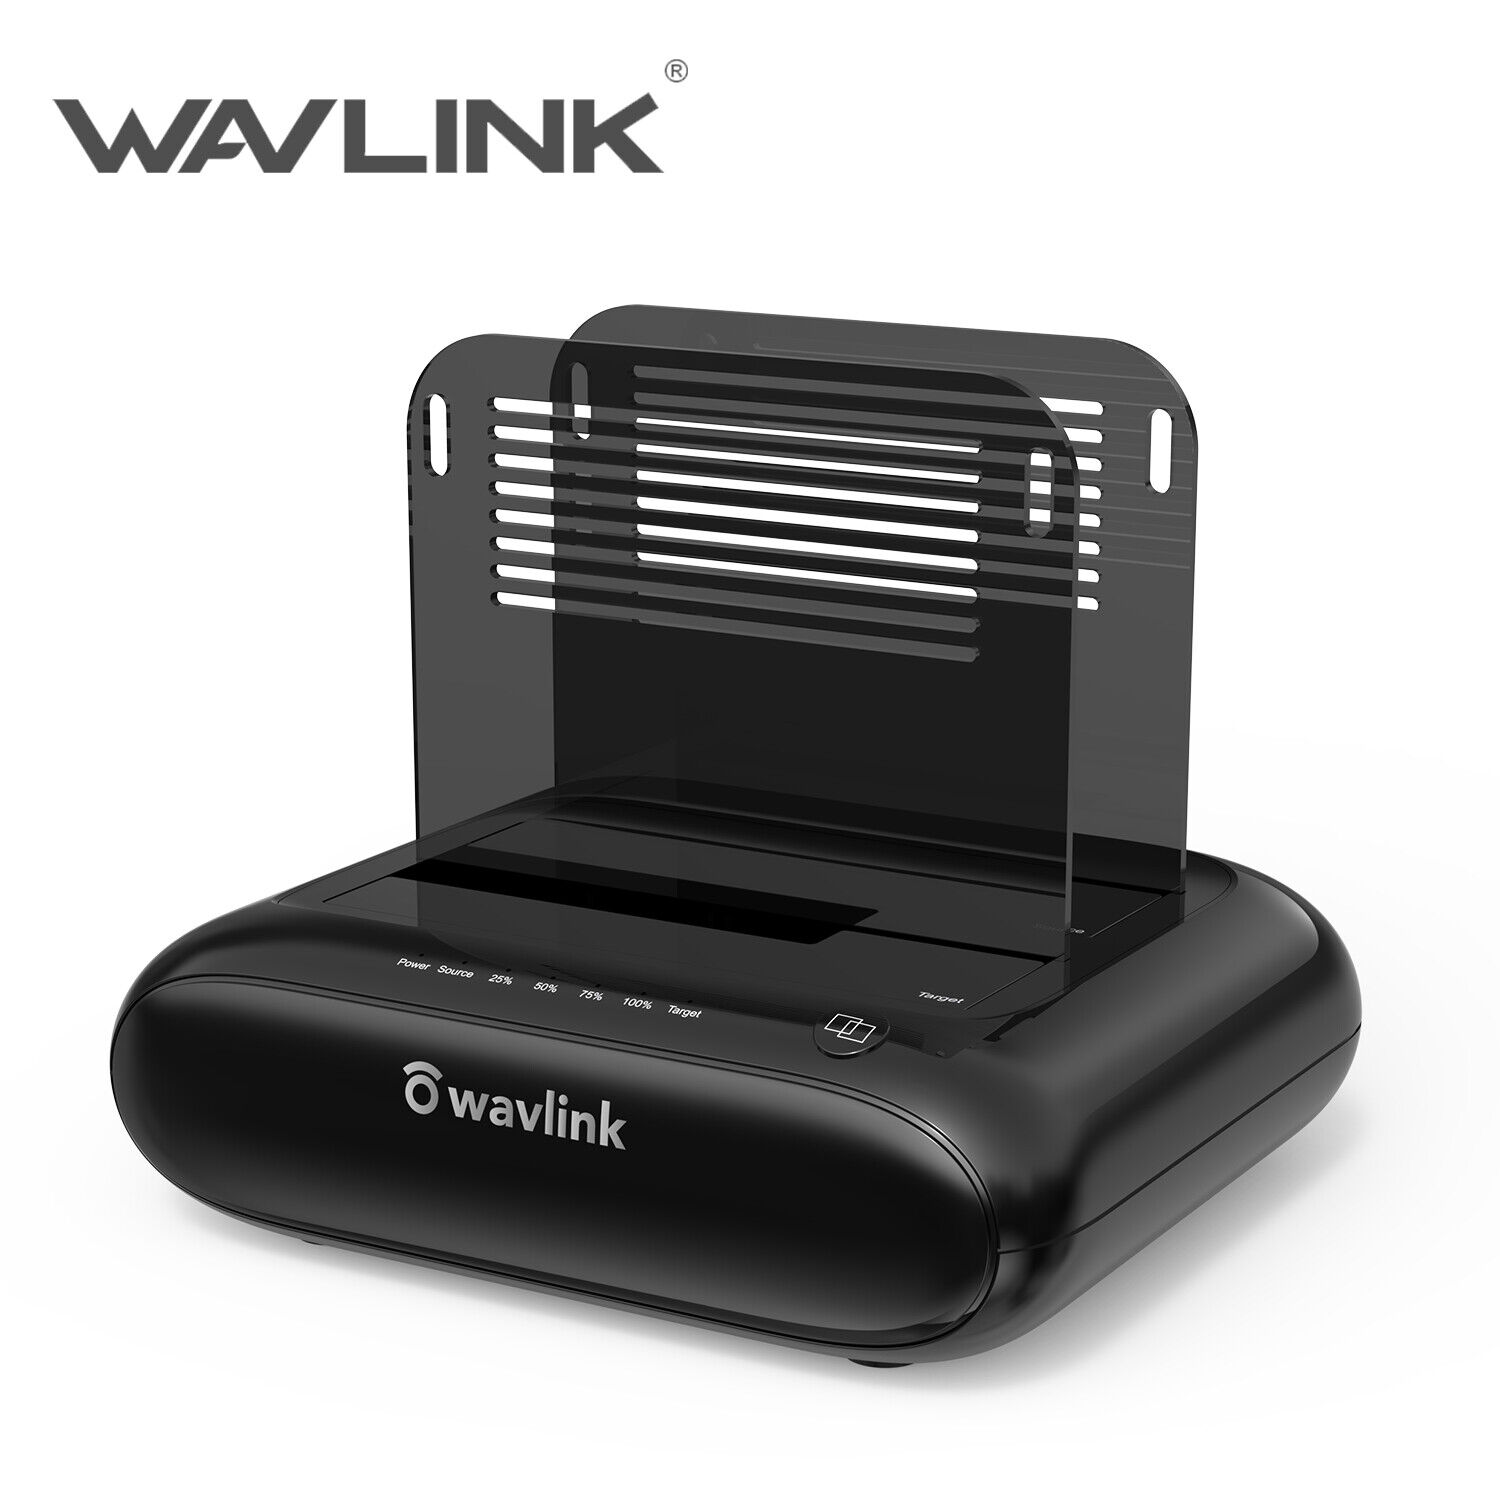 Wavlink USB 3.0 to SATA I/II/III Dual Bay External Hard Drive Docking Station